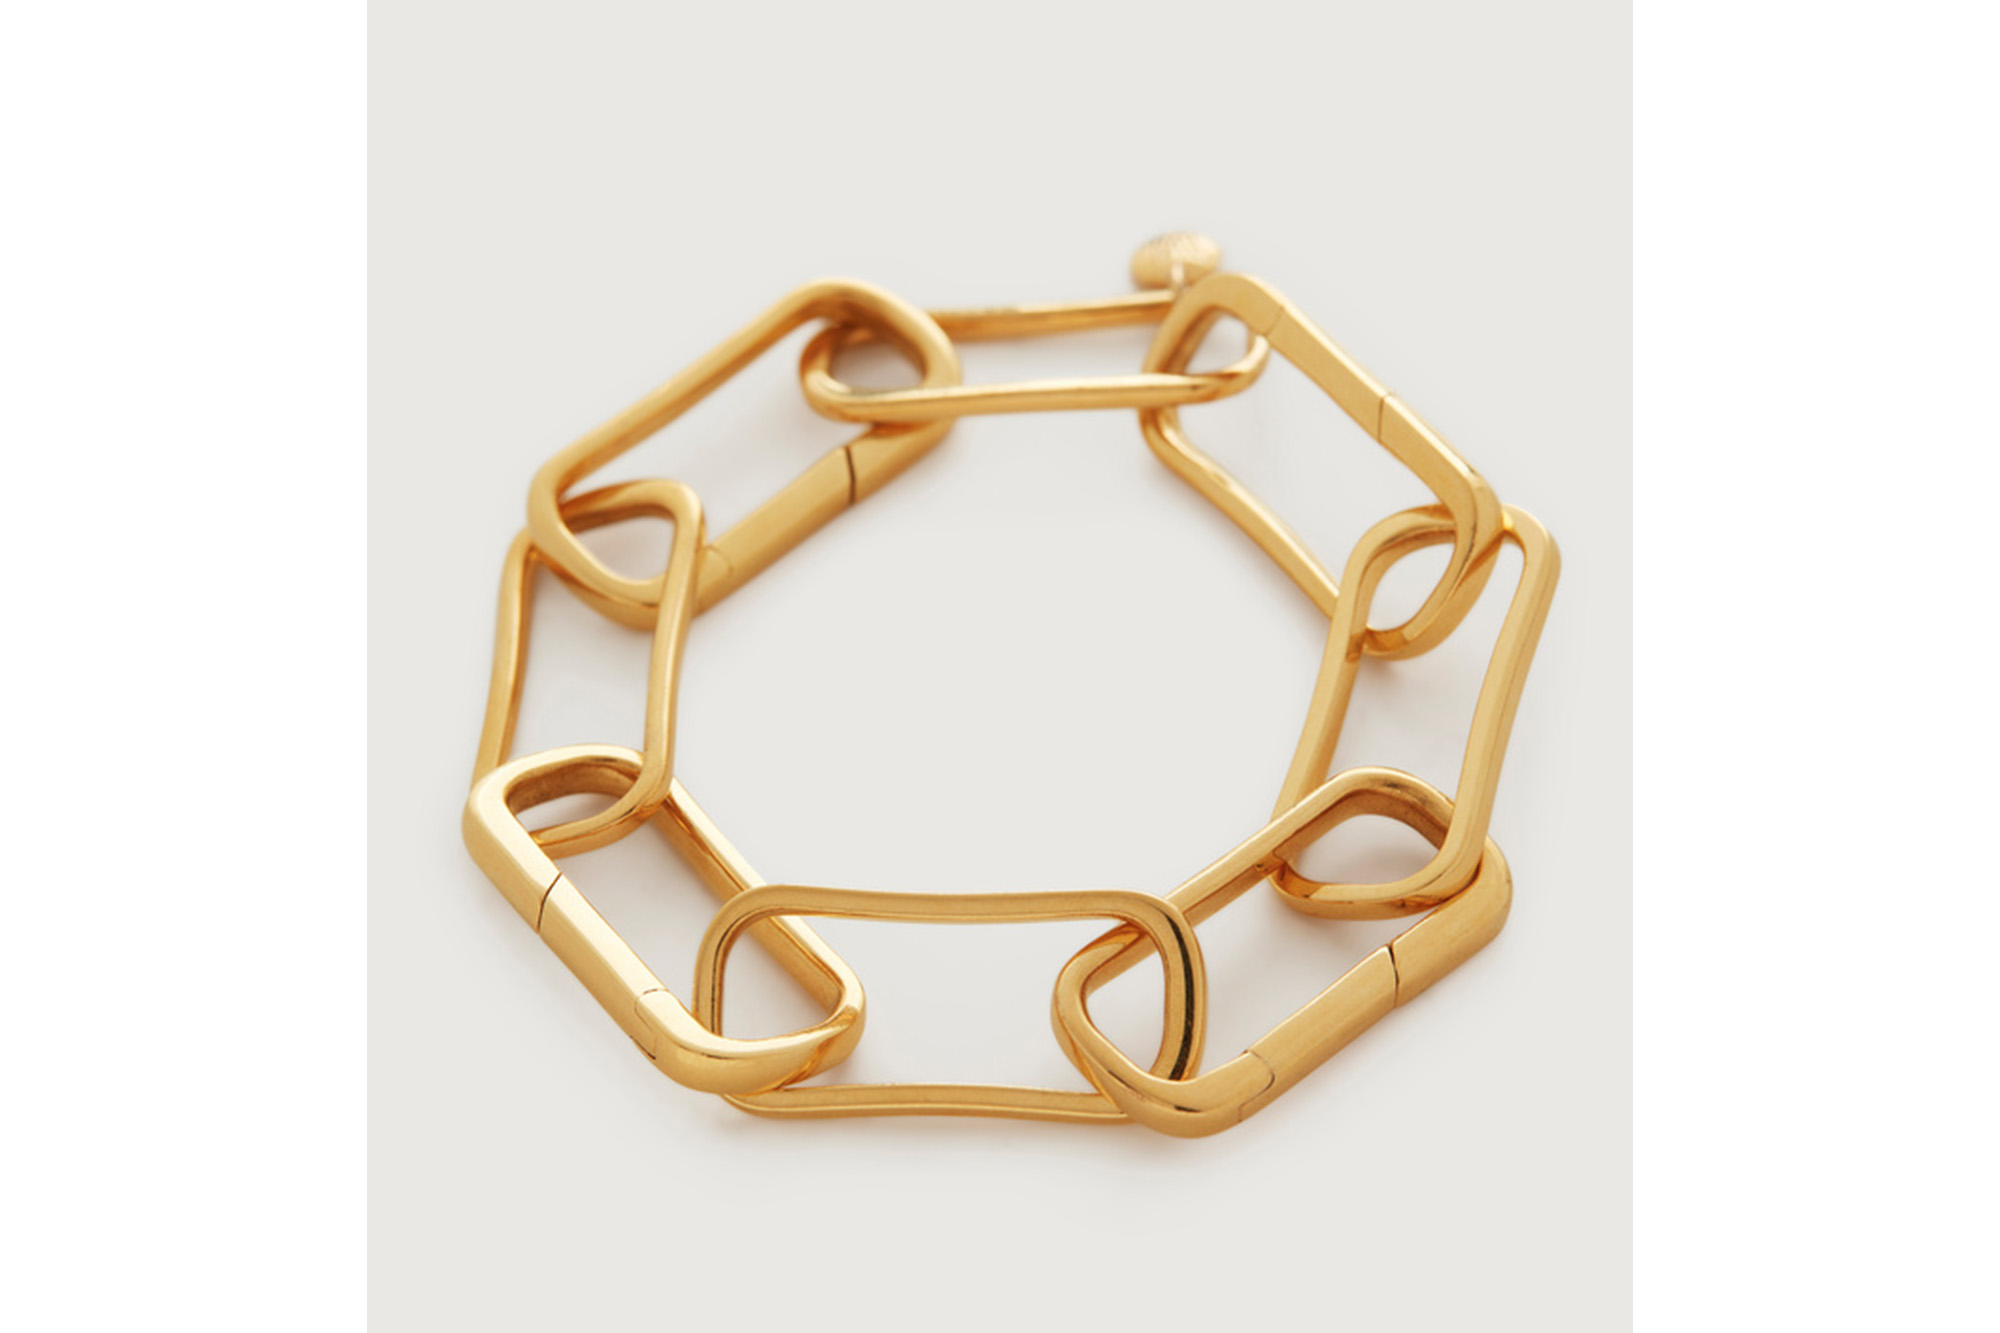 A gold chain bracelet